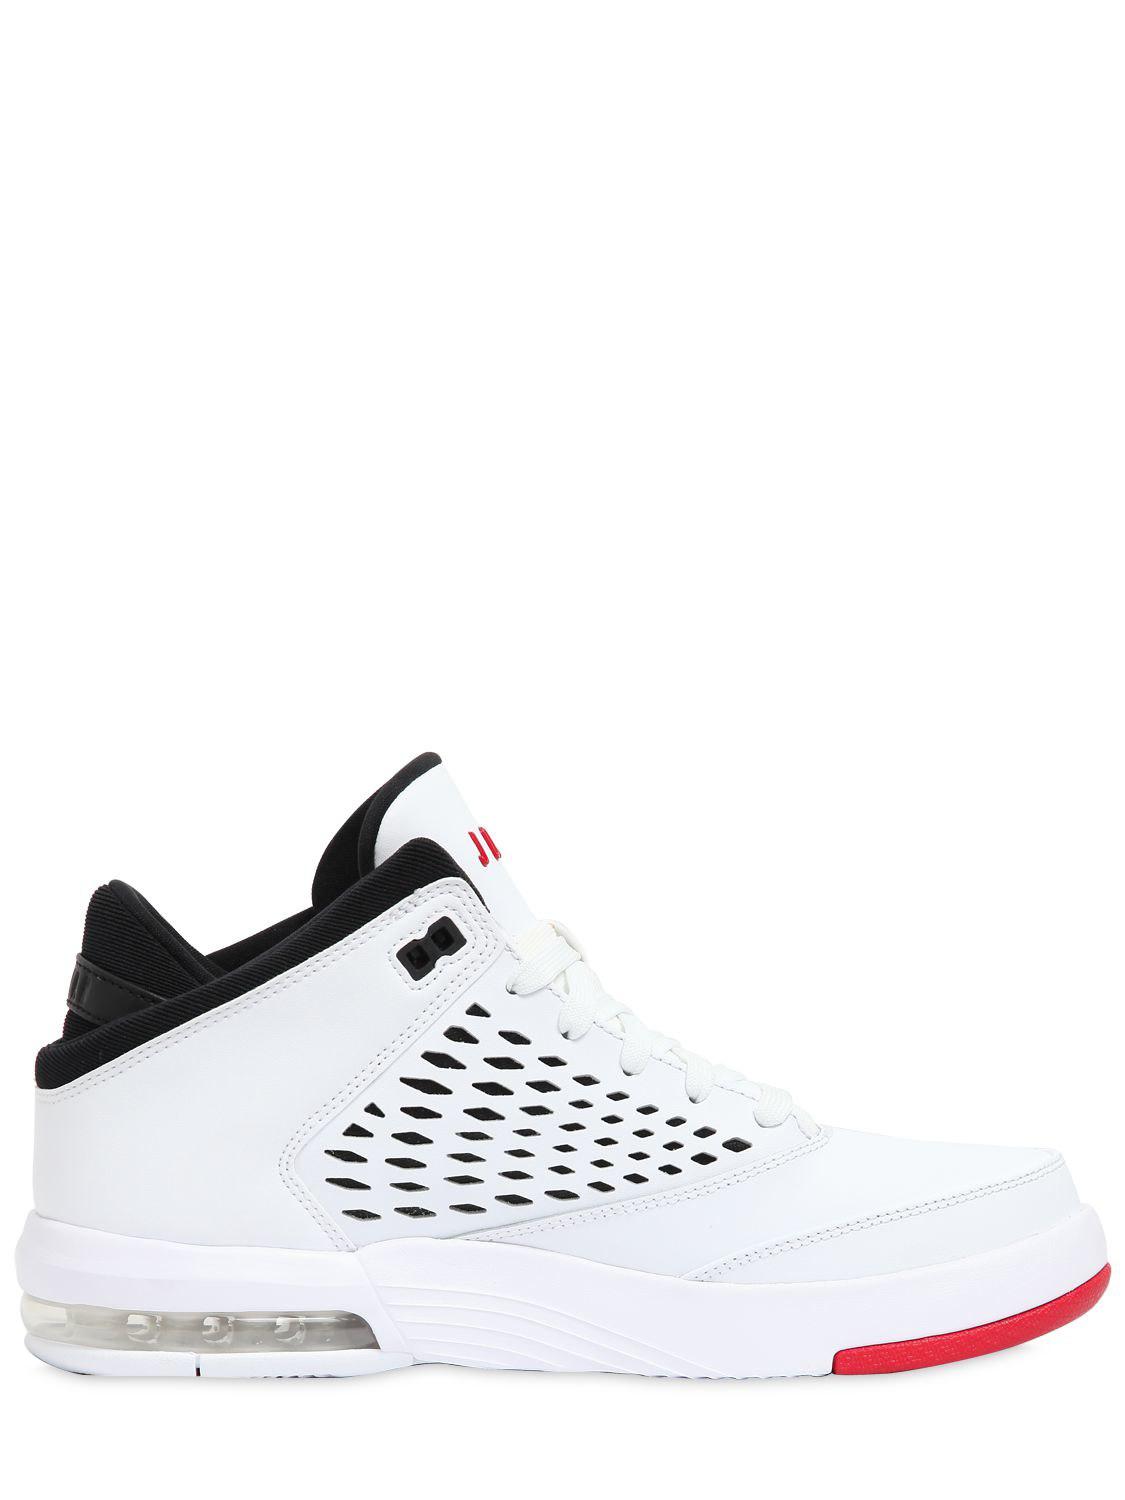 Nike Jordan Flight Origin 4 Sneakers in White for Men - Lyst